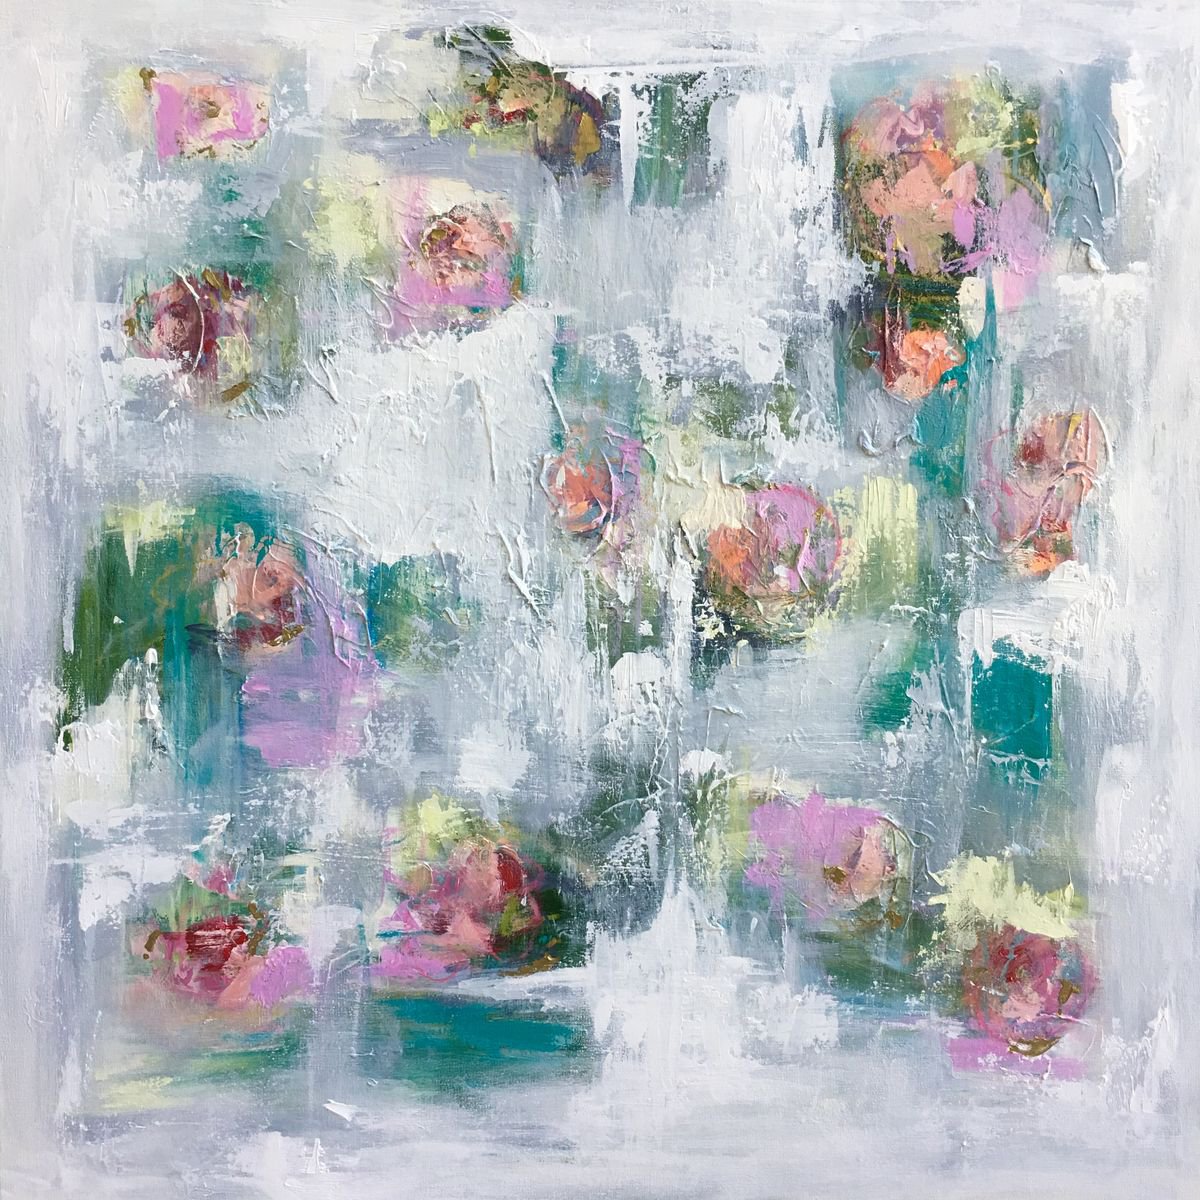 Emerging Blossom by Emma Bell